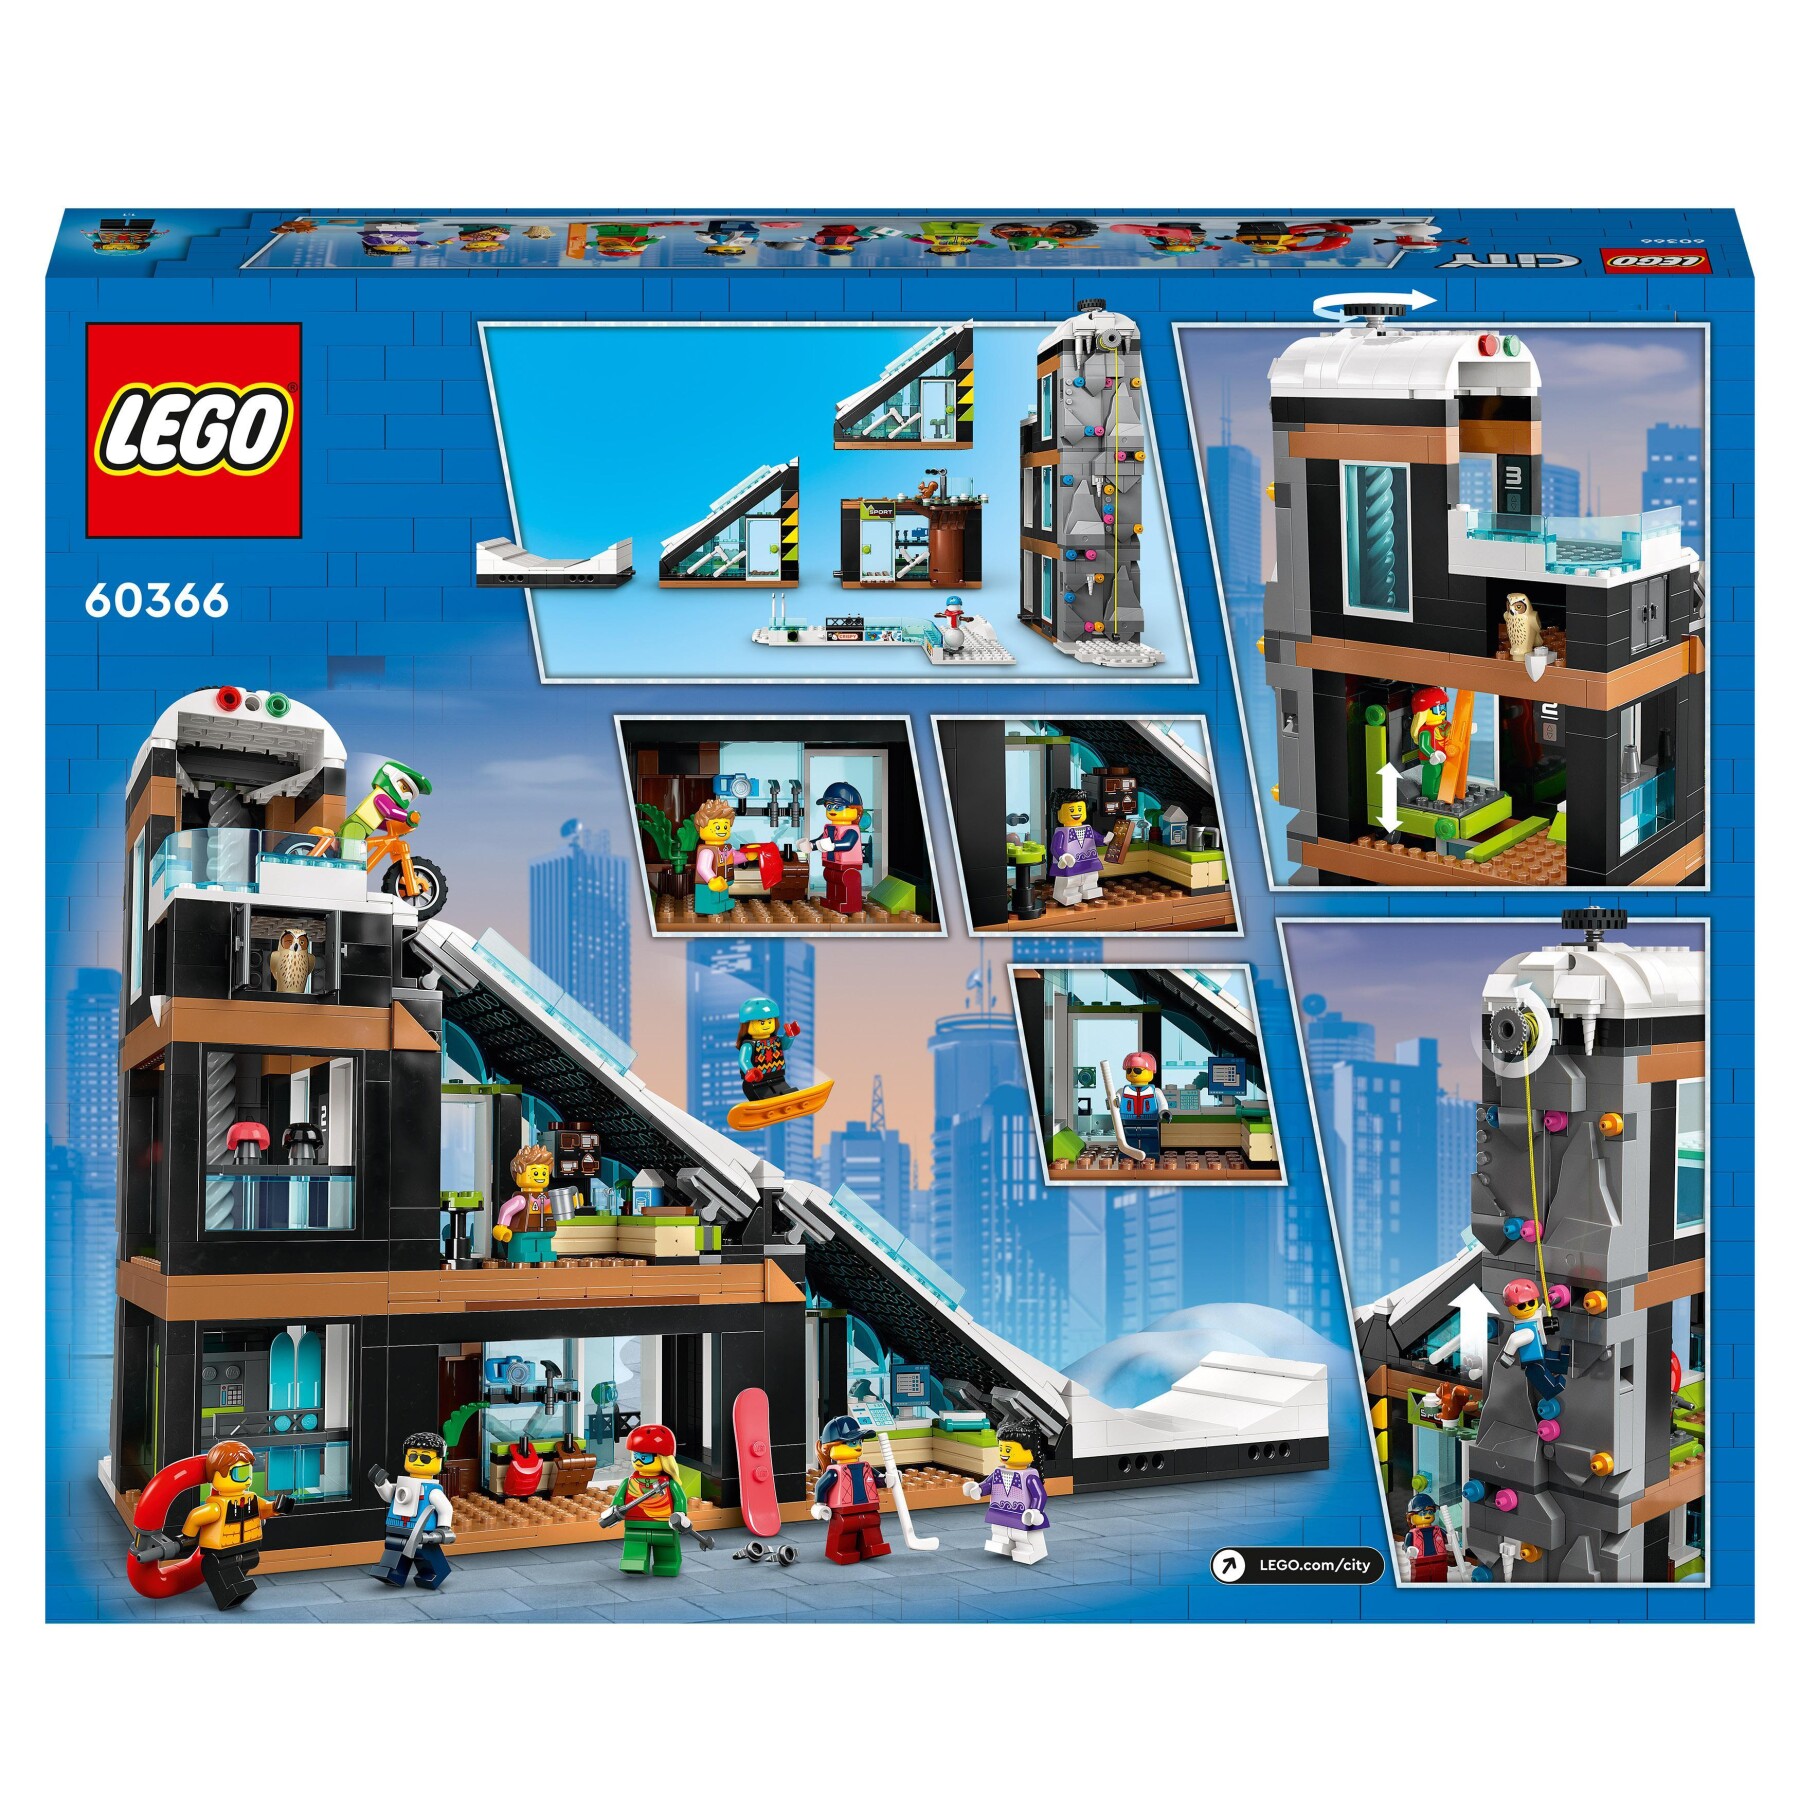 Lego city 60366 centro sci e arrampicata, modular building set a 3 livelli con pista e 8 minifigure, regalo per bambini 7+ - LEGO CITY